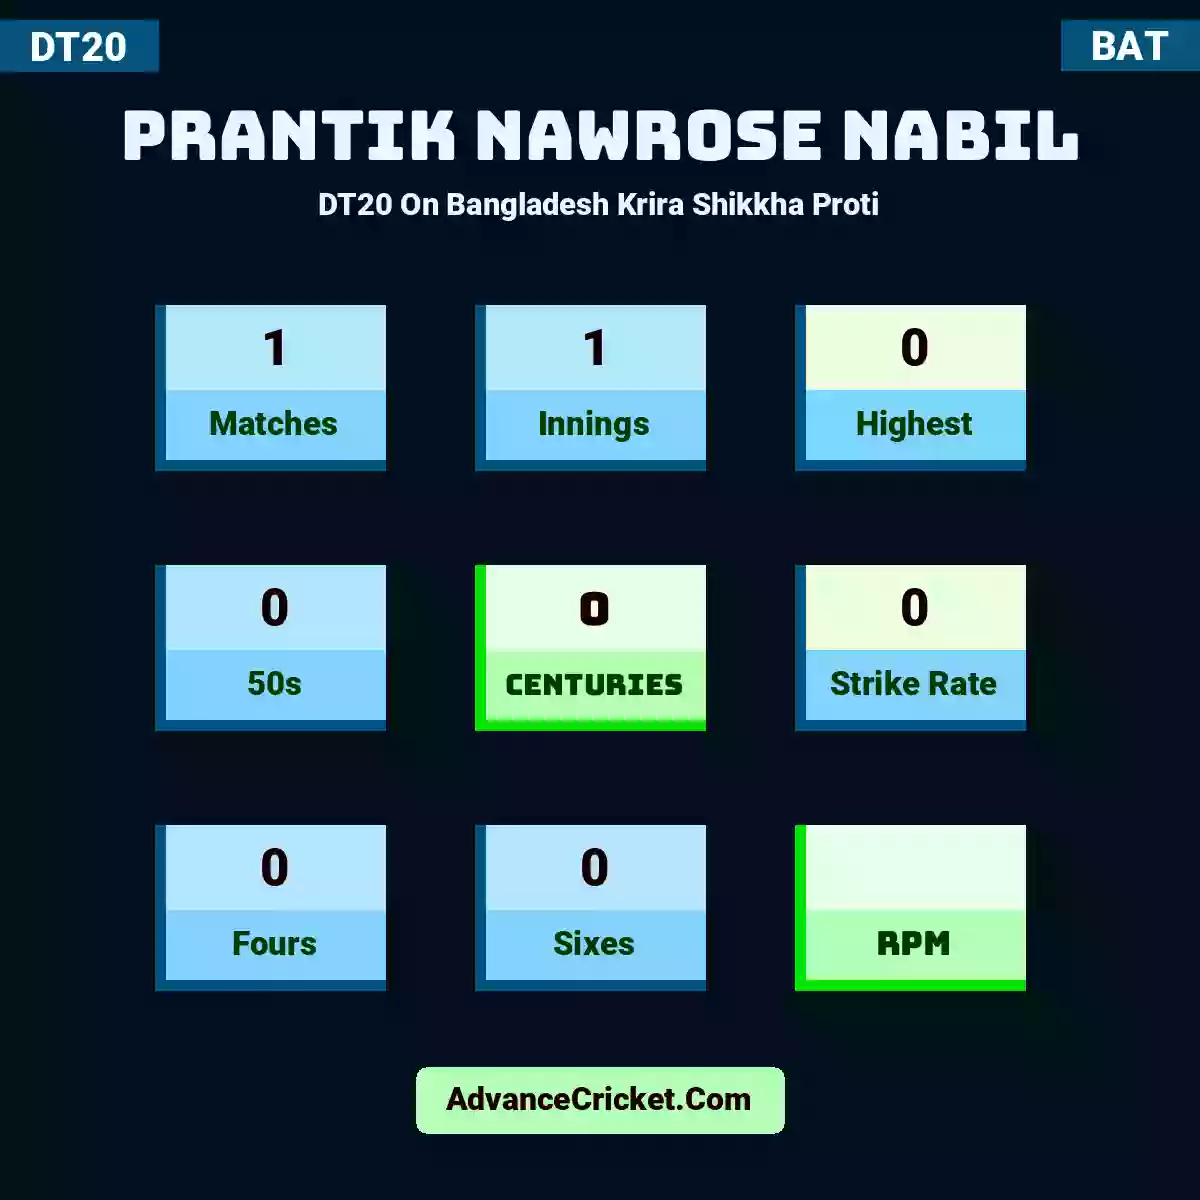 Prantik Nawrose Nabil DT20  On Bangladesh Krira Shikkha Proti, Prantik Nawrose Nabil played 1 matches, scored 0 runs as highest, 0 half-centuries, and 0 centuries, with a strike rate of 0. P.Nabil hit 0 fours and 0 sixes.